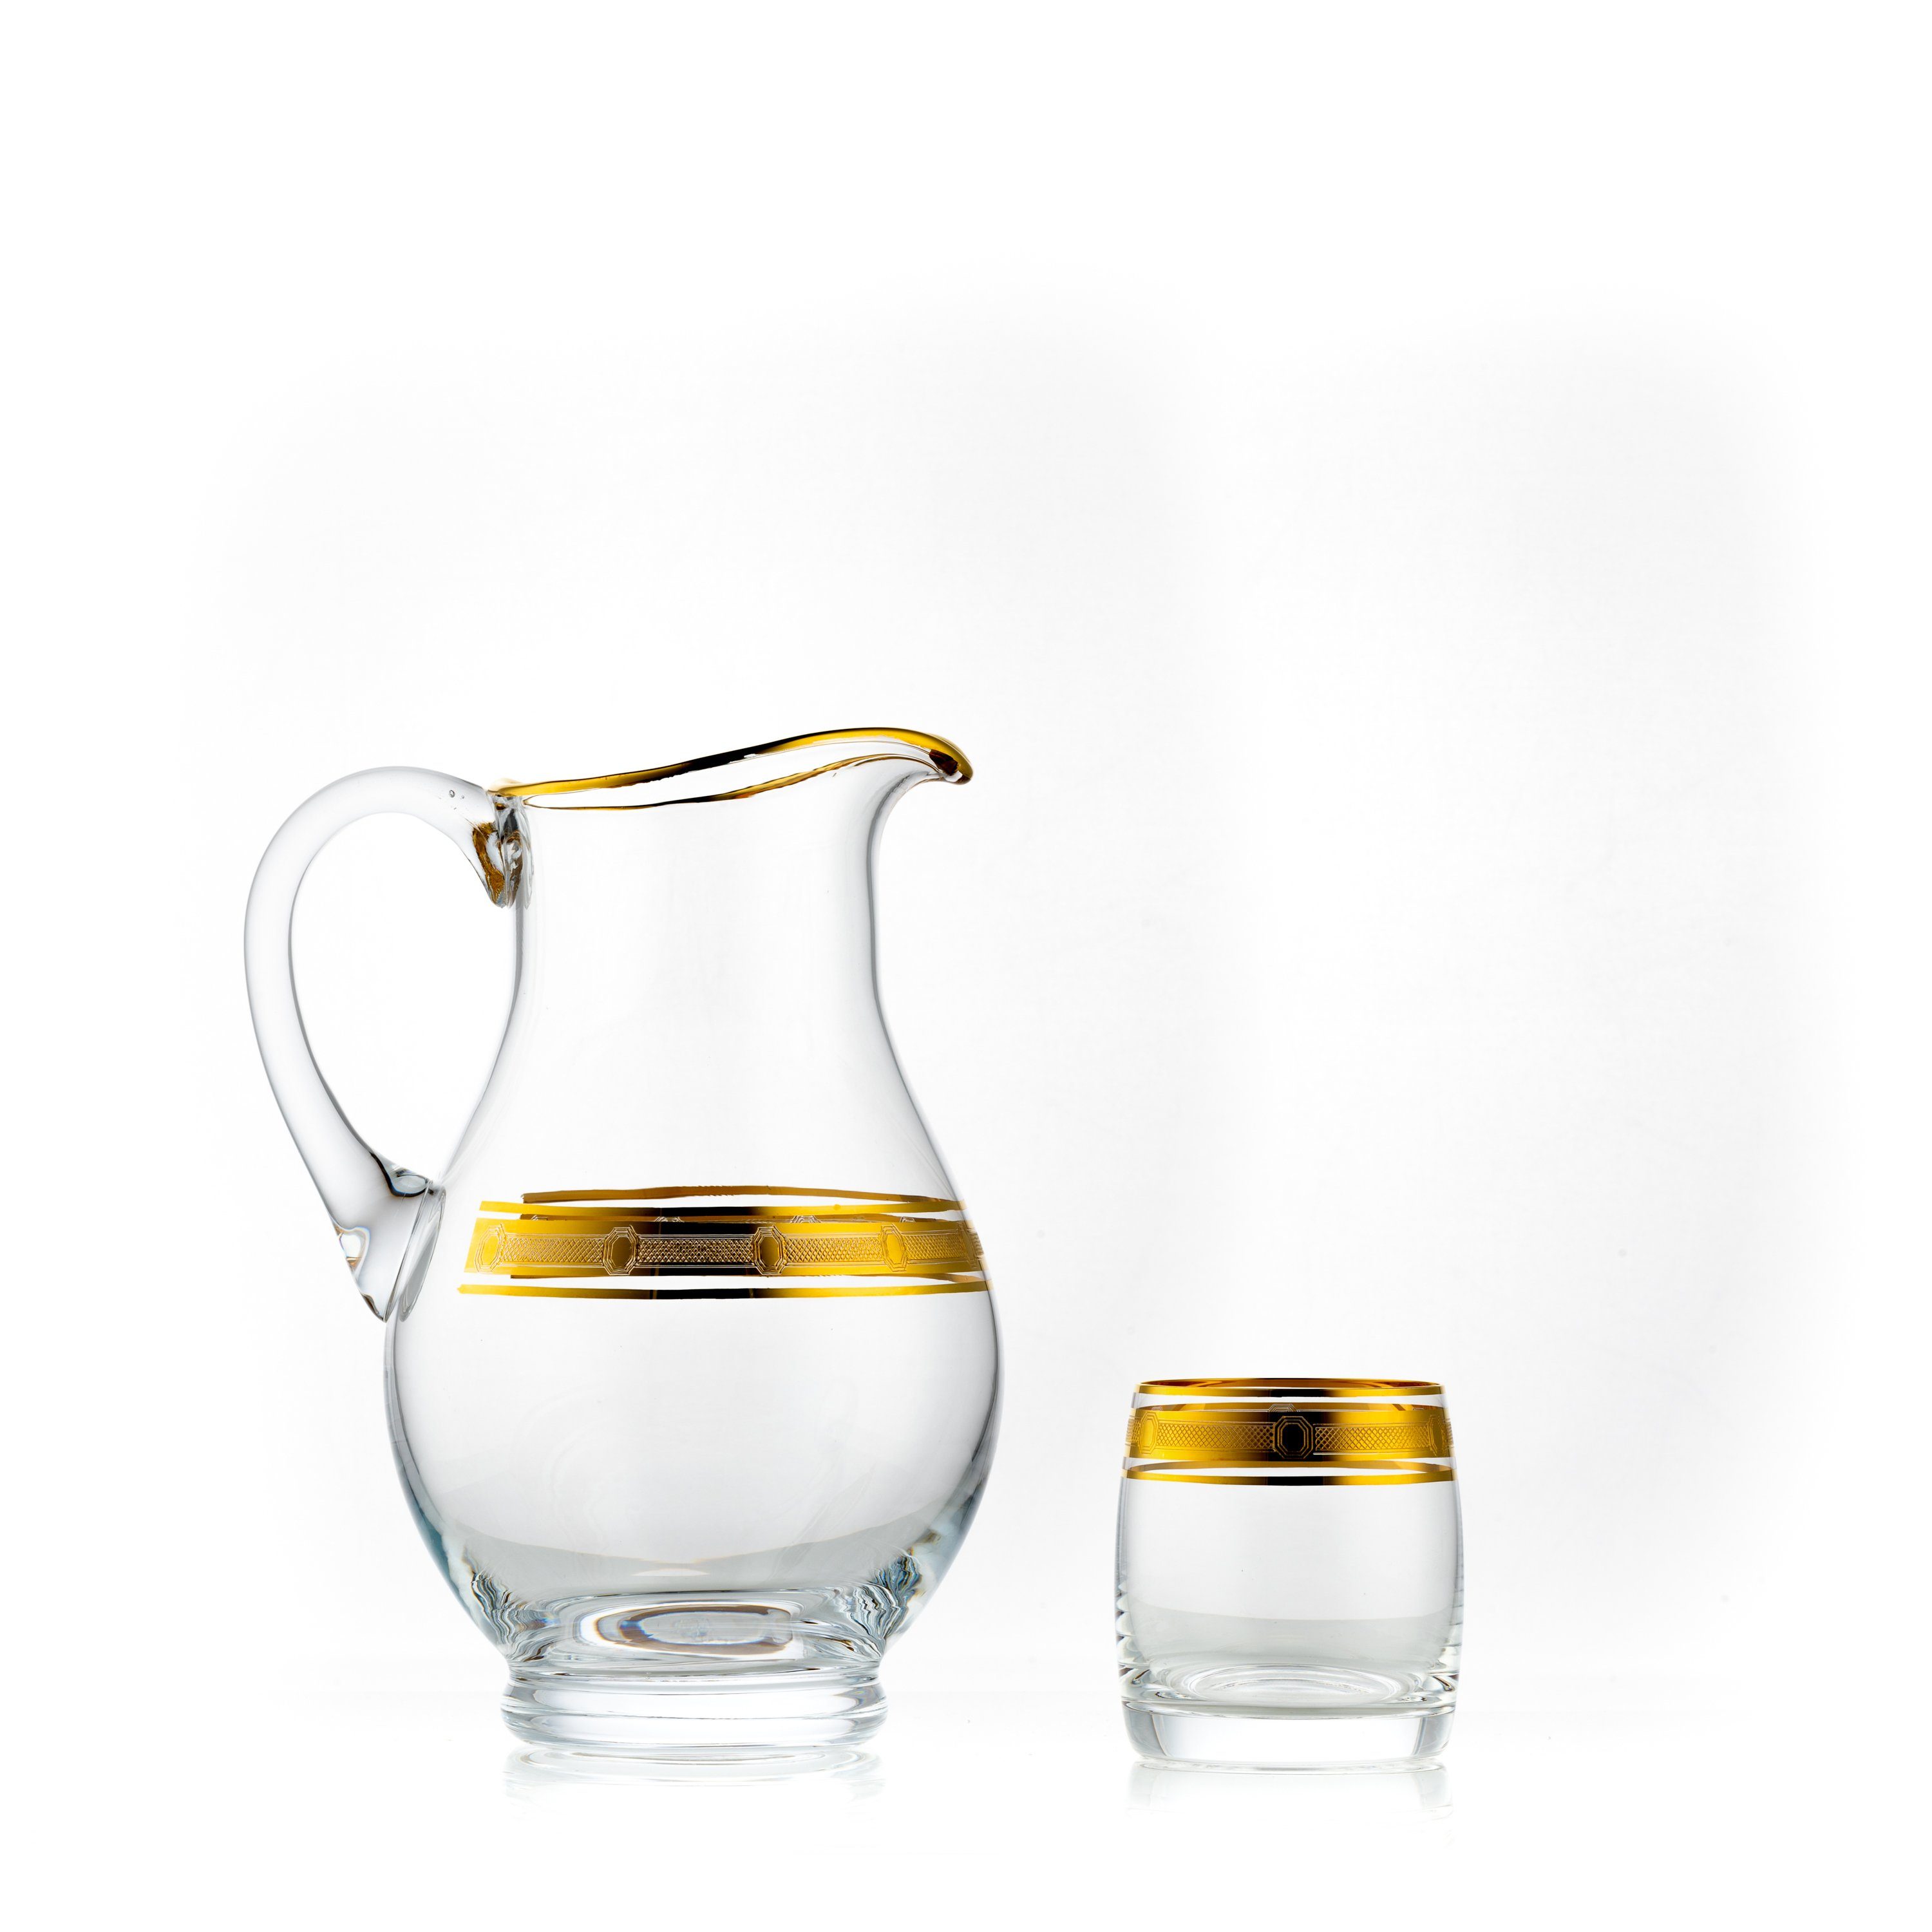 Crystalex Gläser-Set Wasserset Lemonade Gold 7 teilig Set Kristallglas Wassergläser, Kanne, Bleikristall, Kristallglas, Gravur